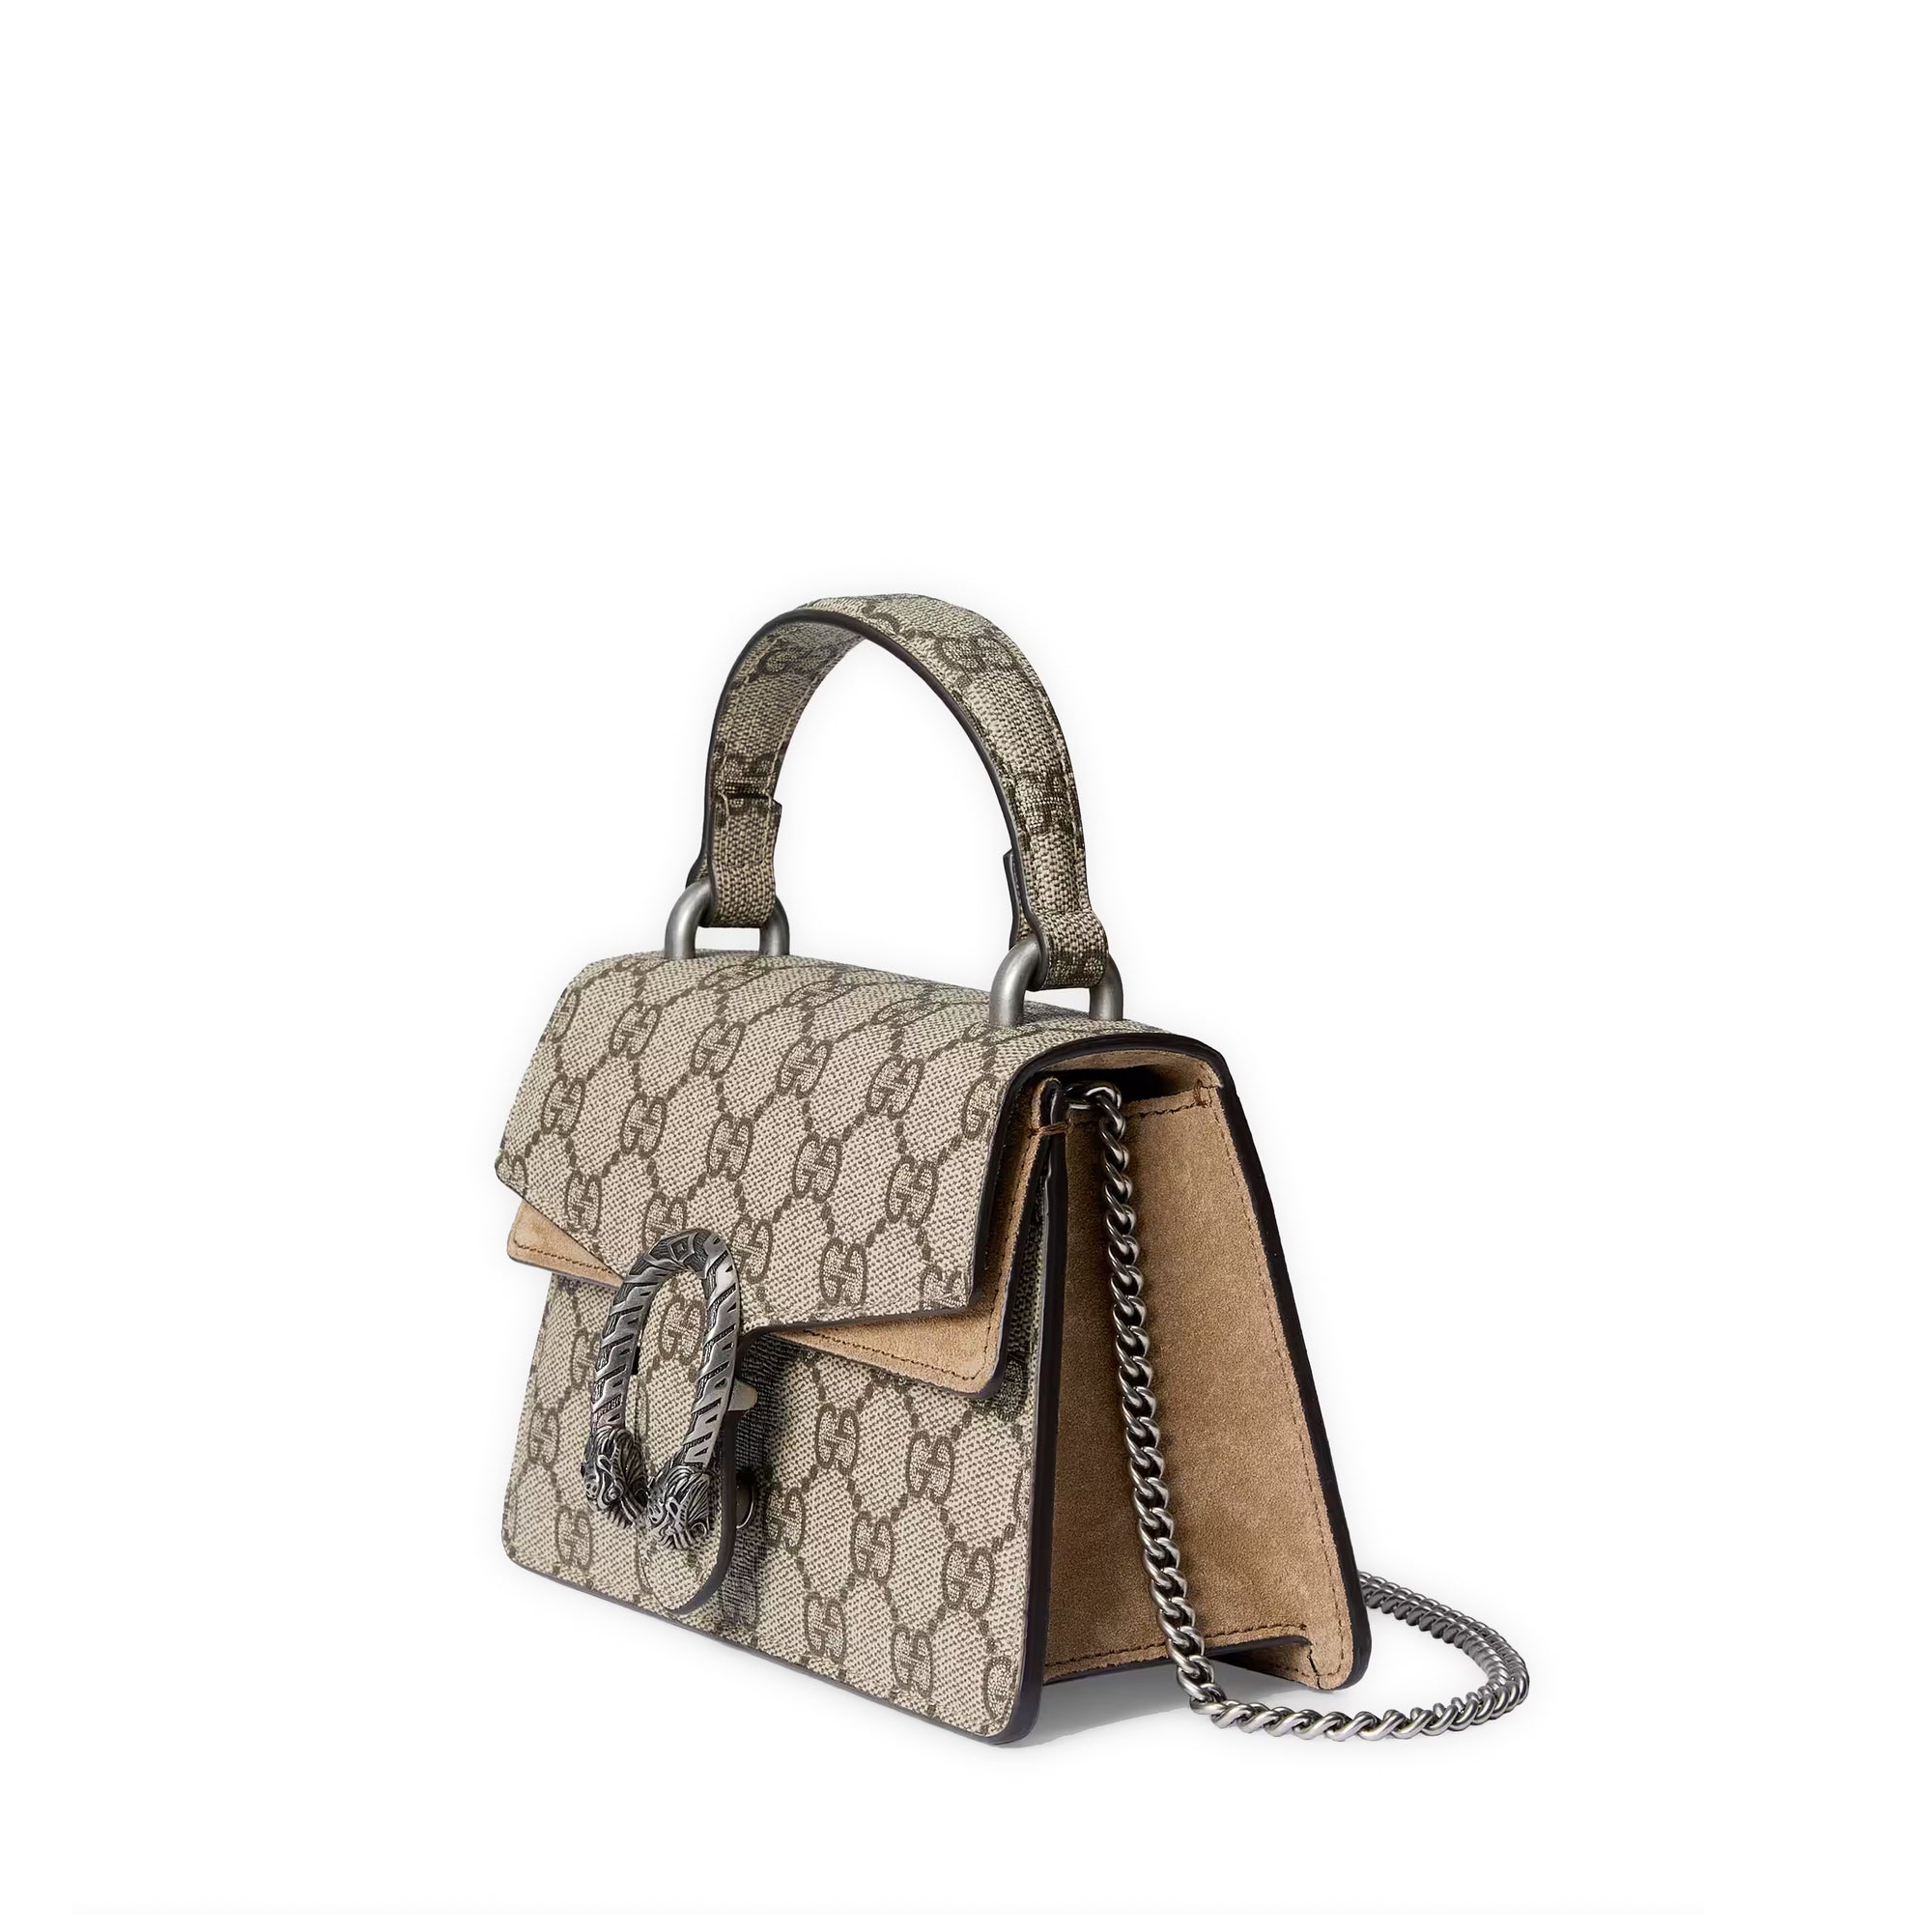 Gucci - Women’s Dionysus Mini Top Handle Bag - (Beige) view 2